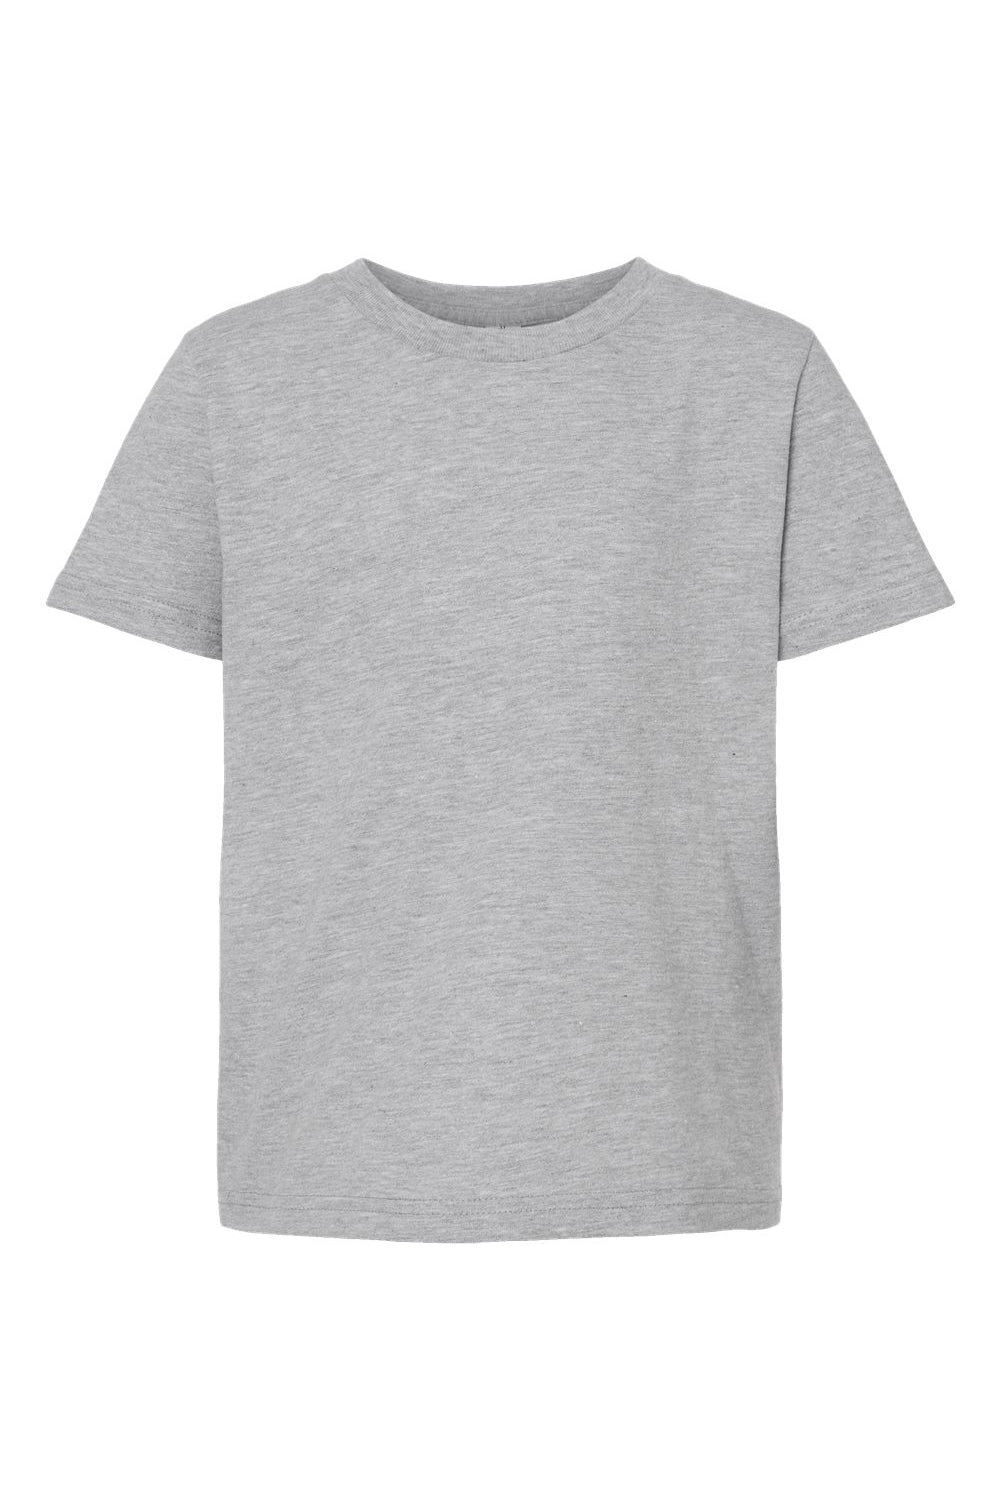 Tultex 235 Youth Fine Jersey Short Sleeve Crewneck T-Shirt Heather Grey Flat Front